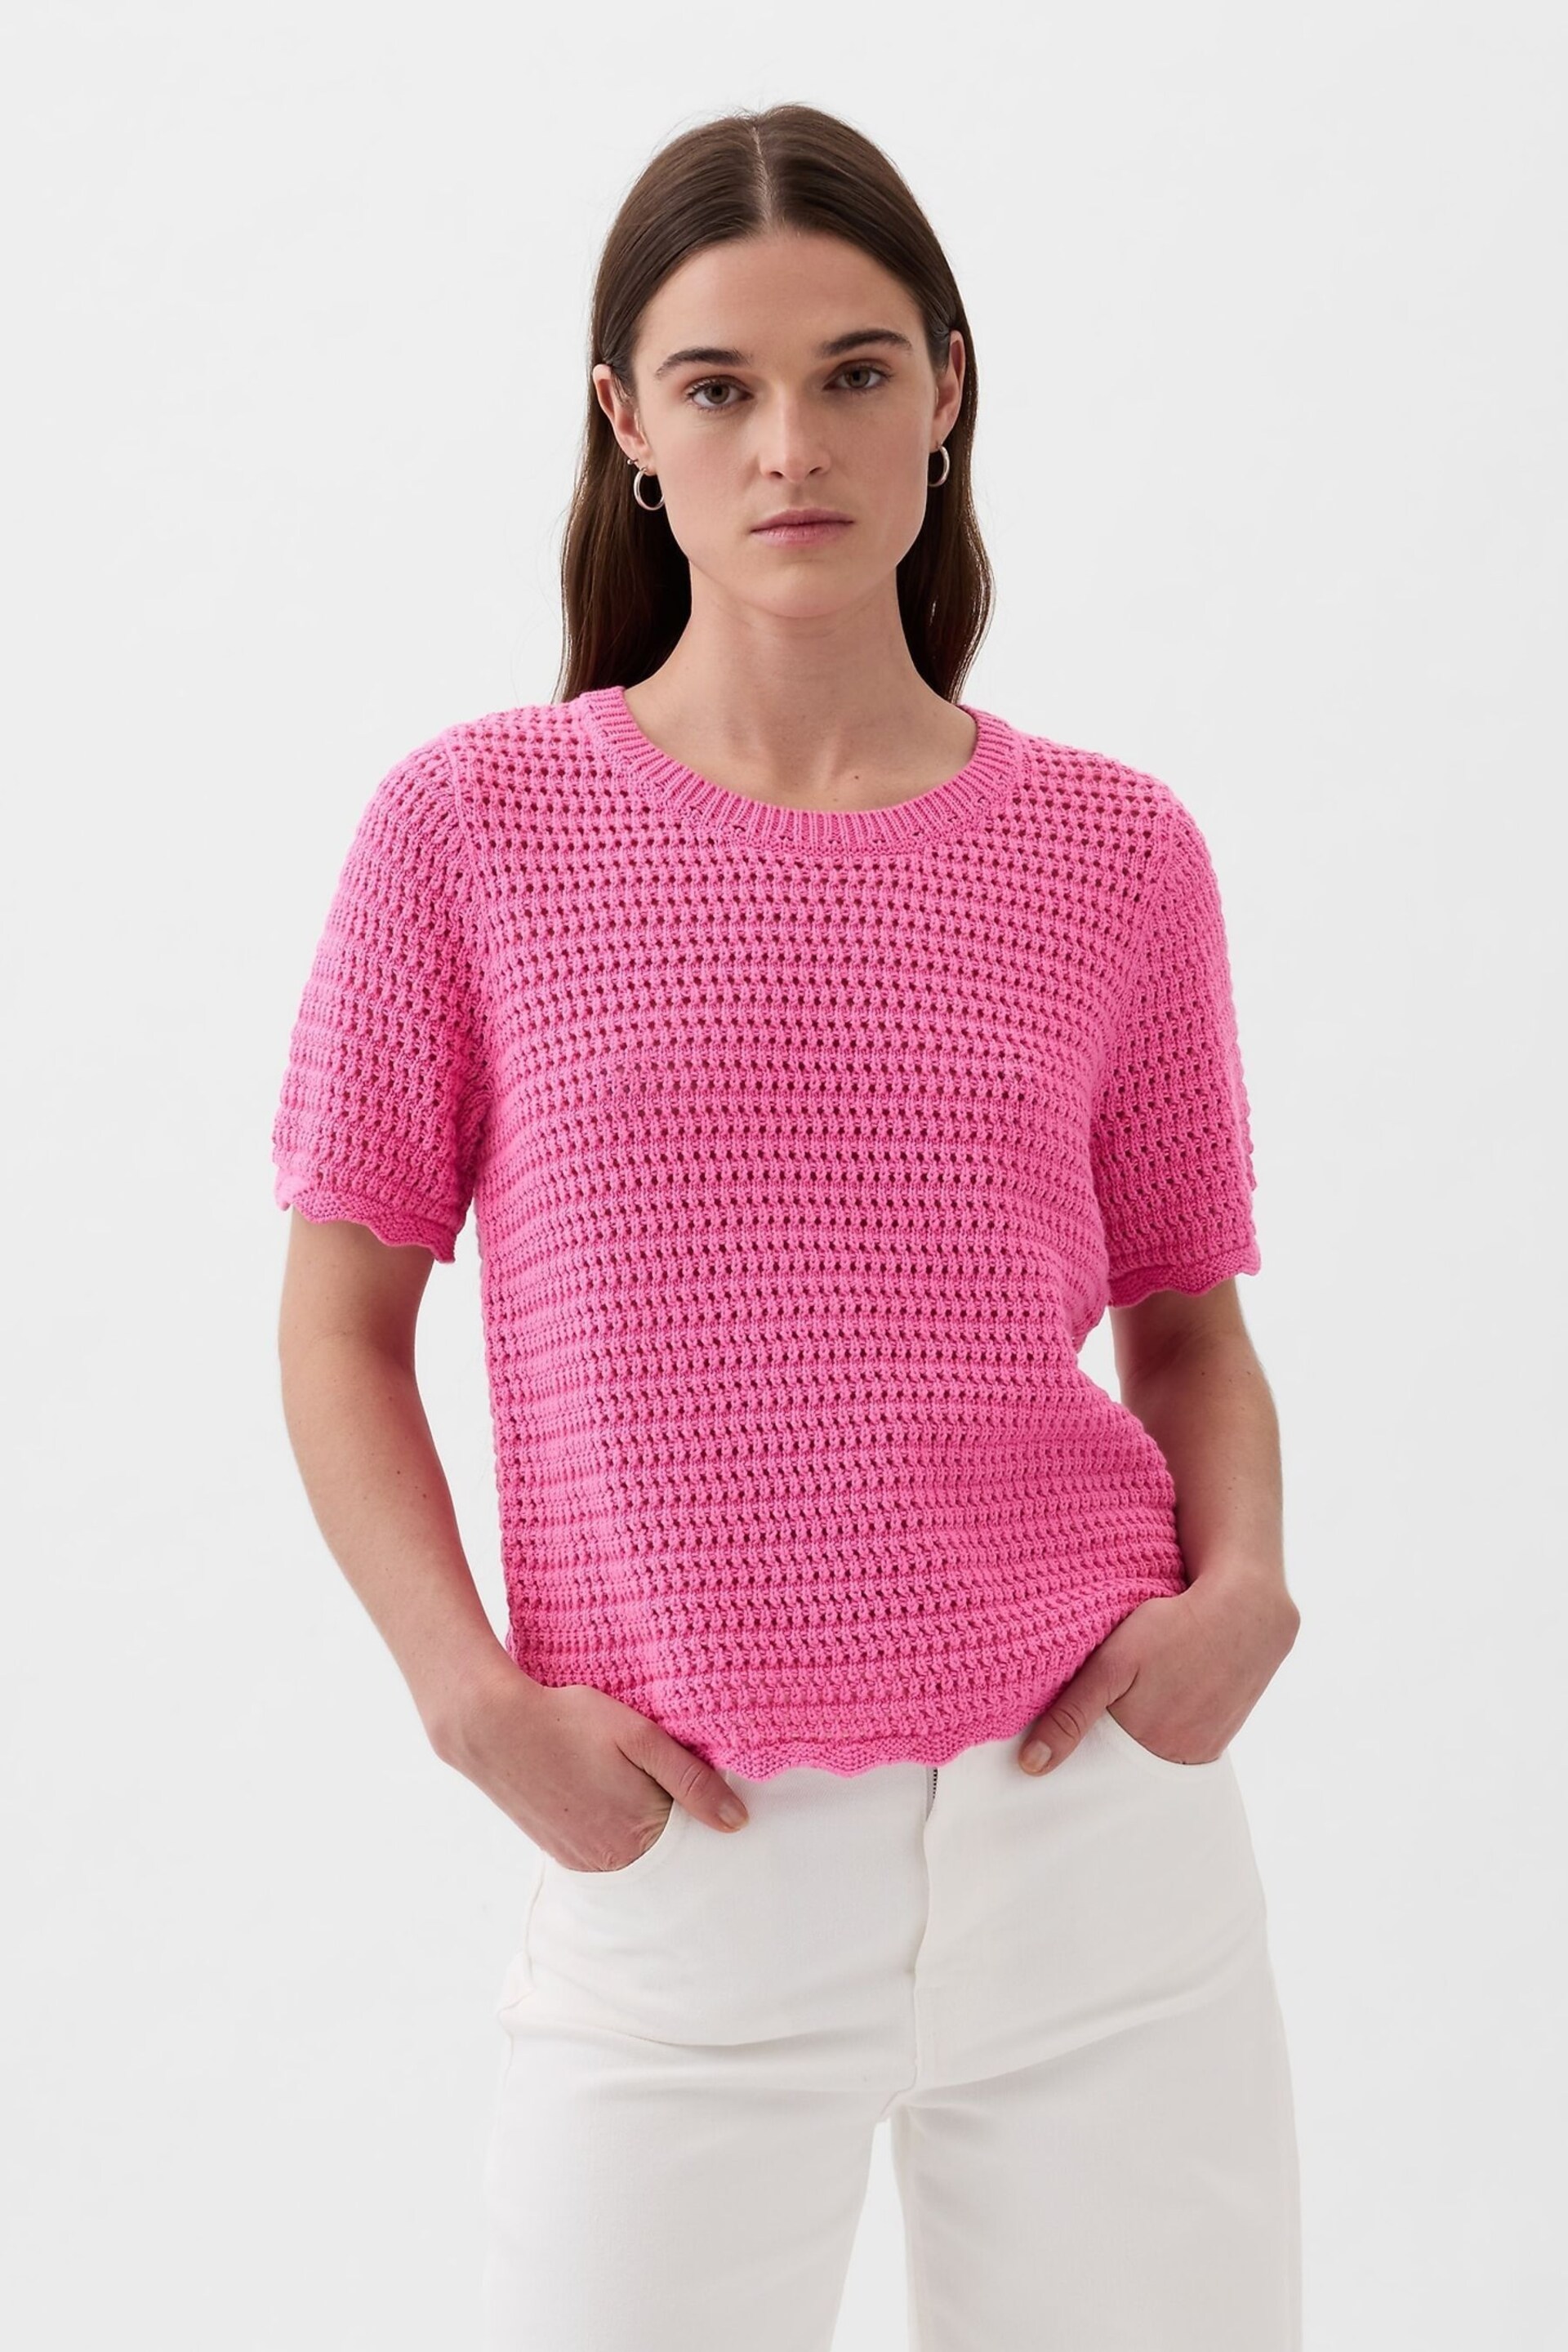 Gap Pink Crochet Crew Neck Short Sleeve Knit Jumper - Image 1 of 2